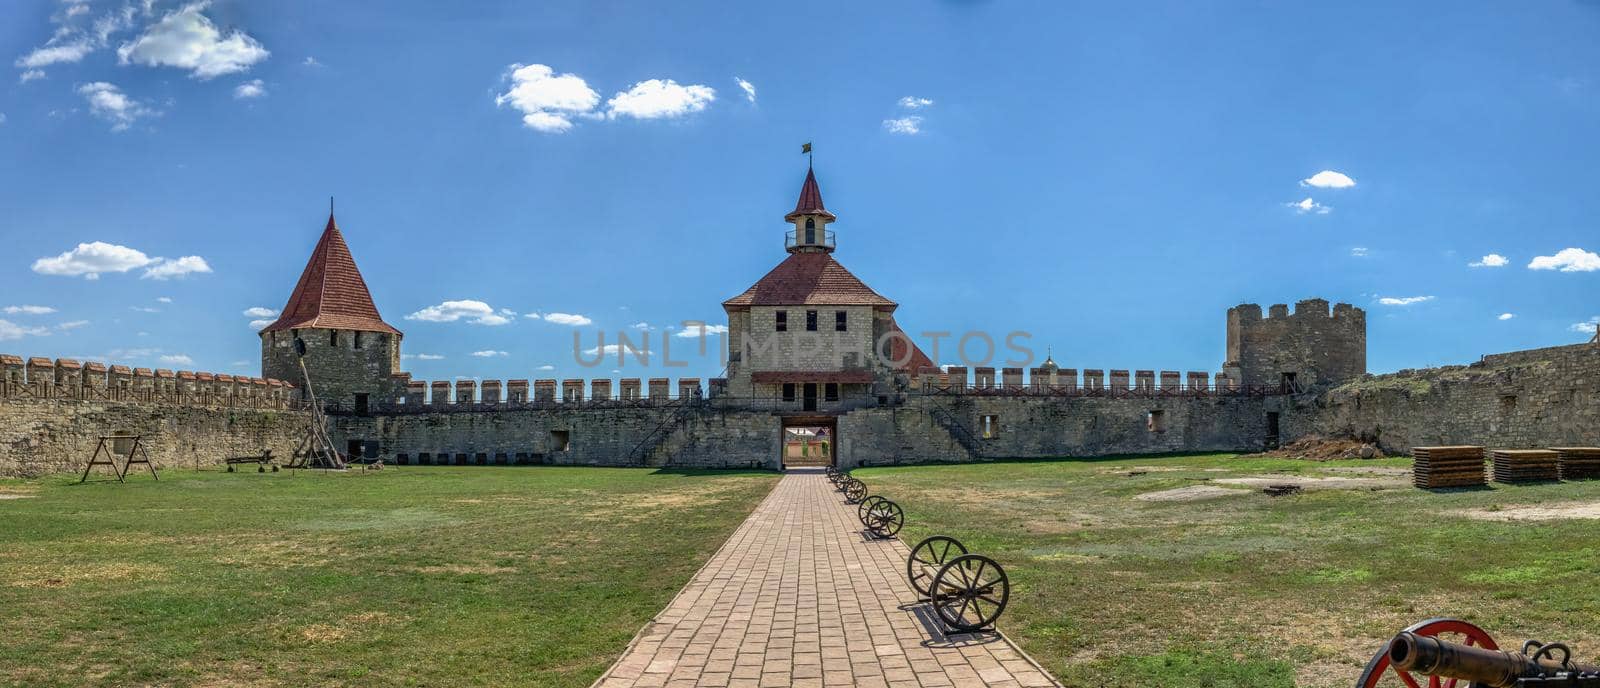 Fortress in Bender, Moldova by Multipedia